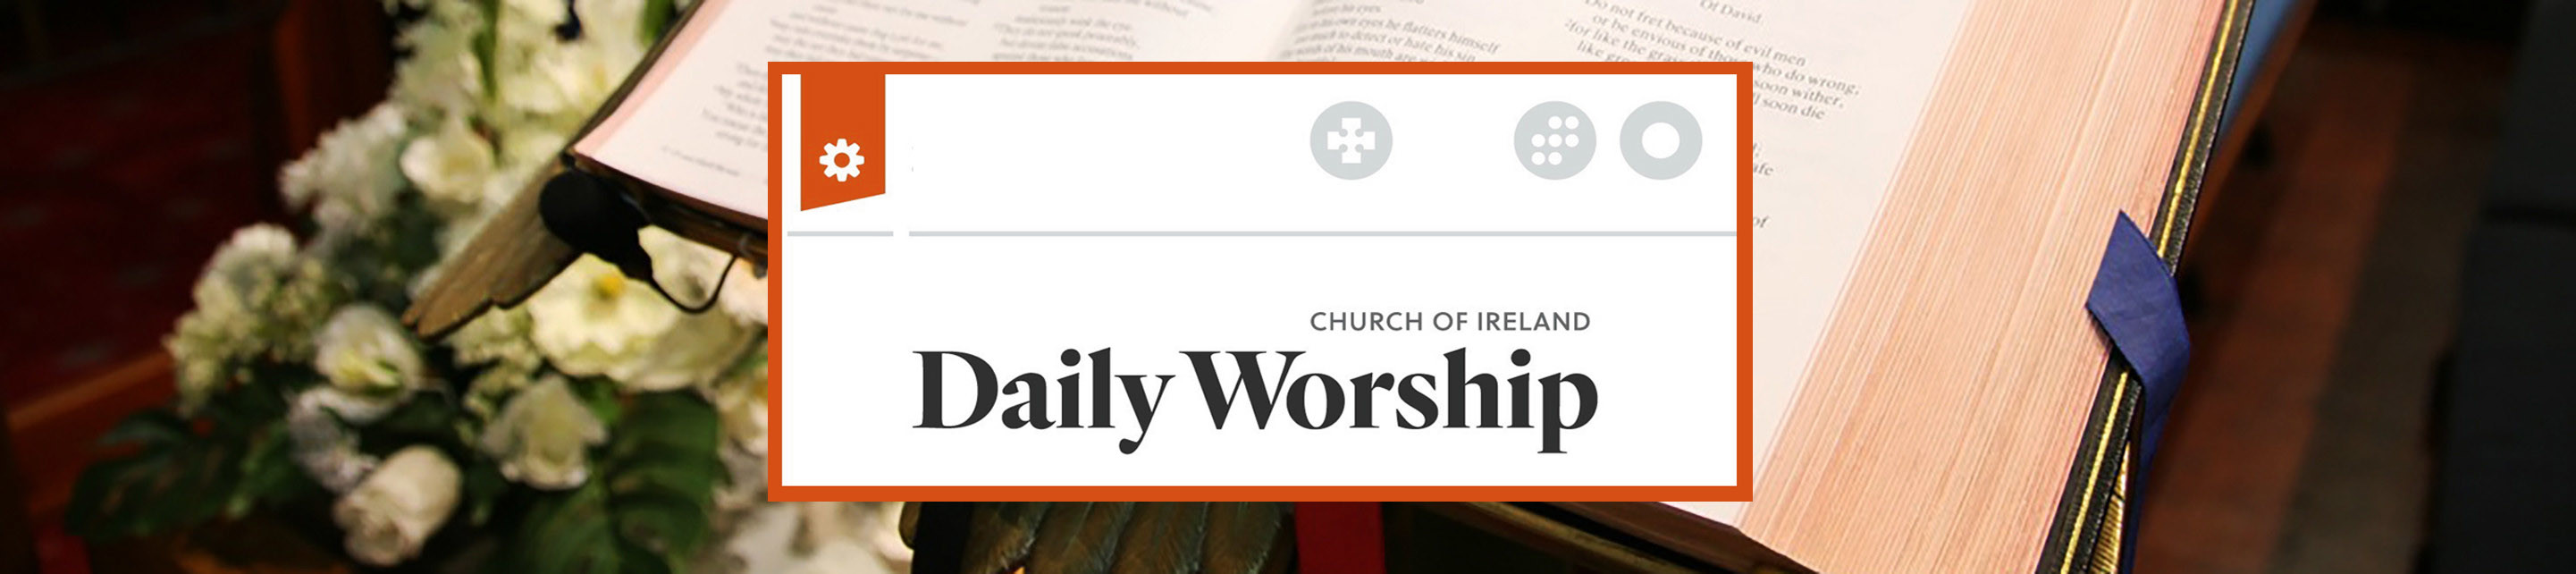 Daily Worship App